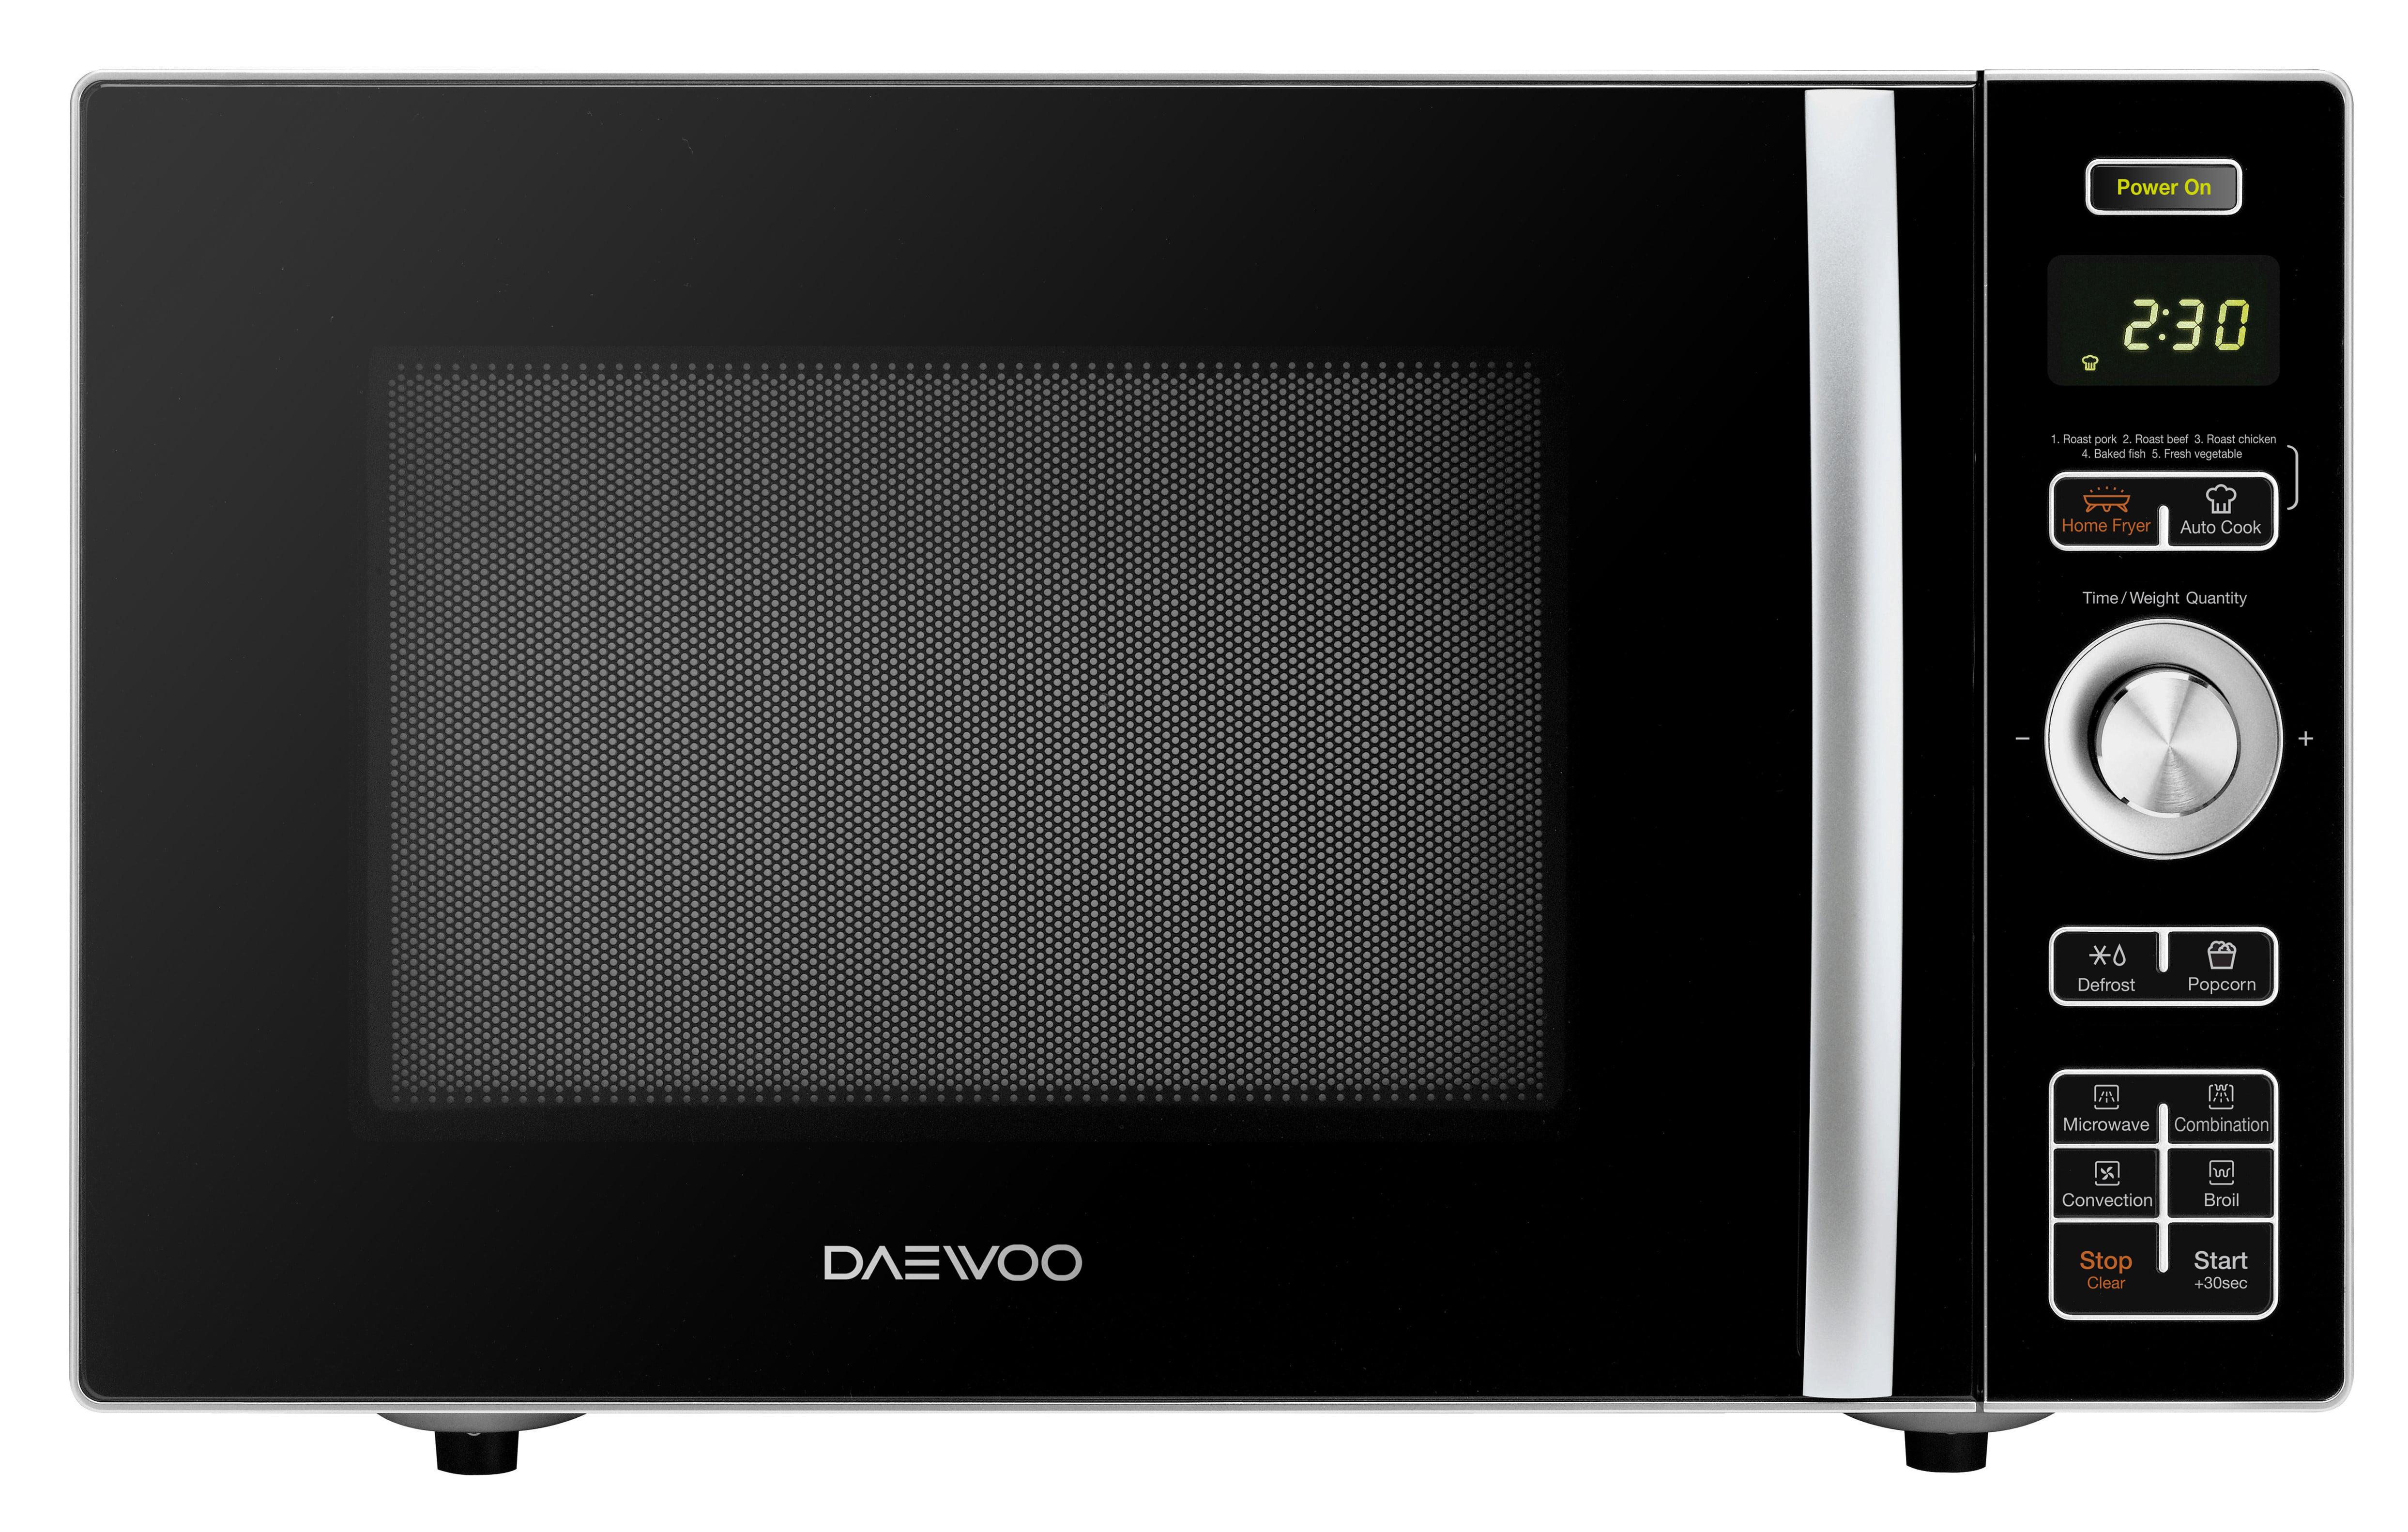 Daewoo KOC-9HAFDB Convection Air Fryer Microwave Oven 0.9 Cu. Ft., 900W